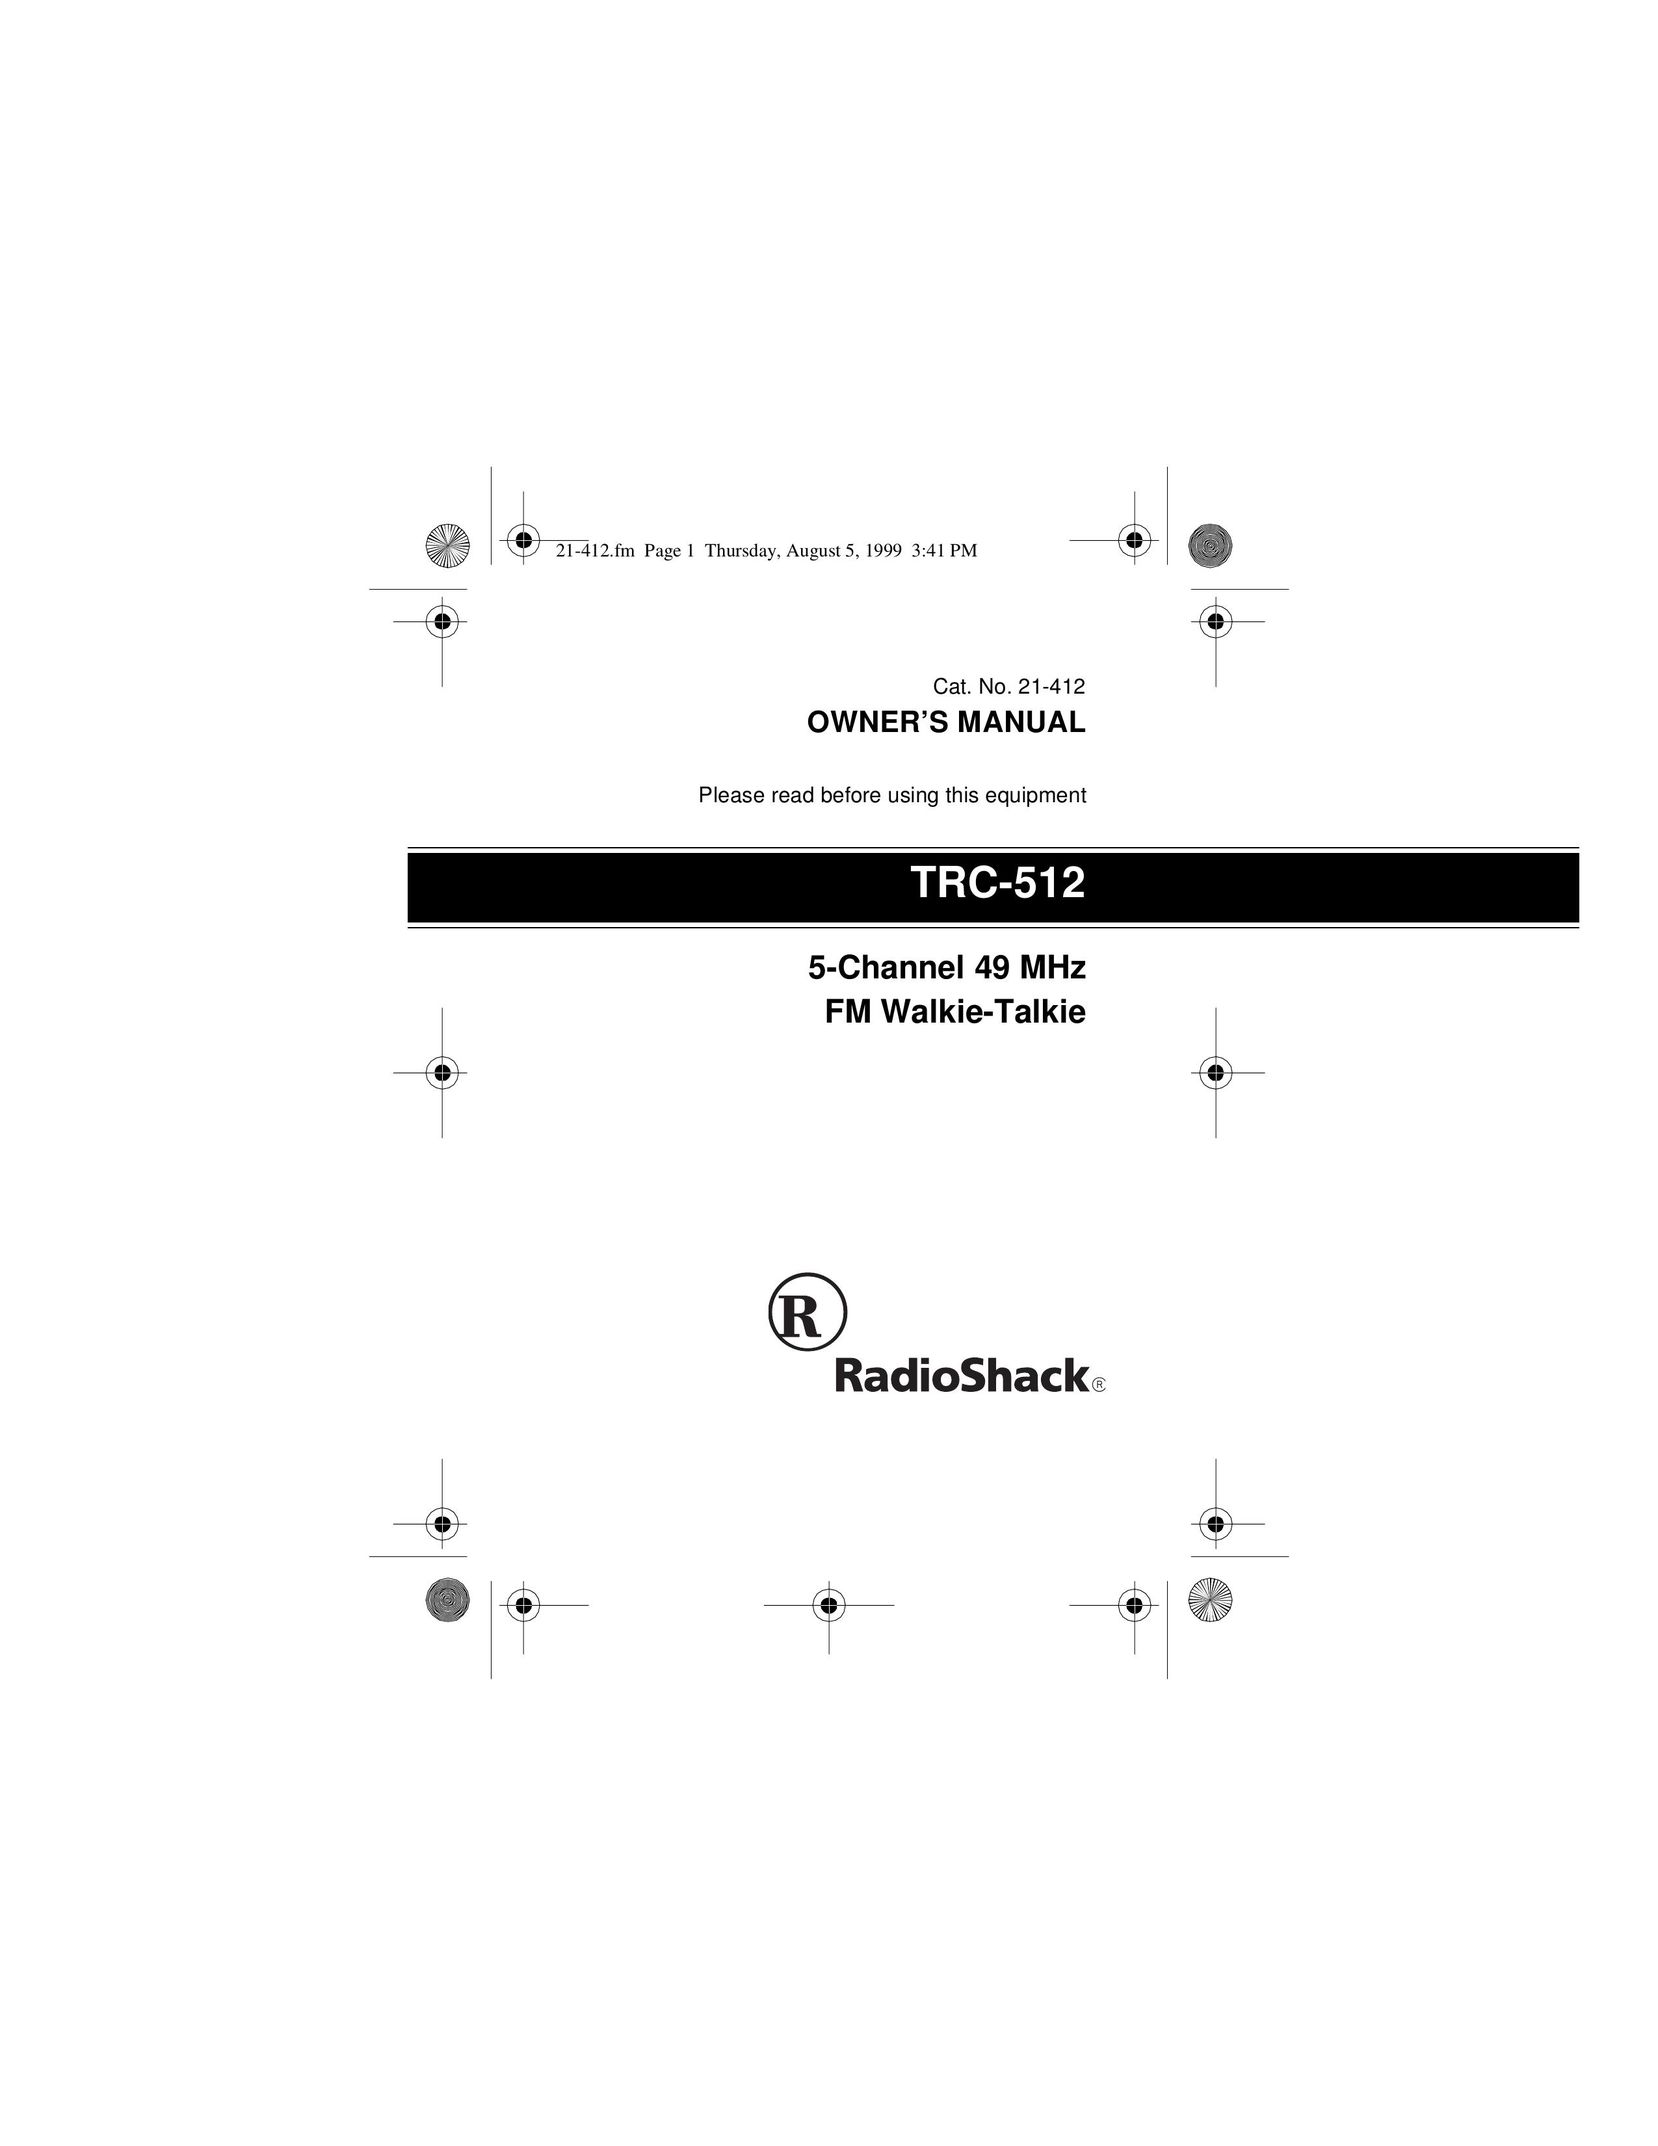 Radio Shack TRC-512 Two-Way Radio User Manual